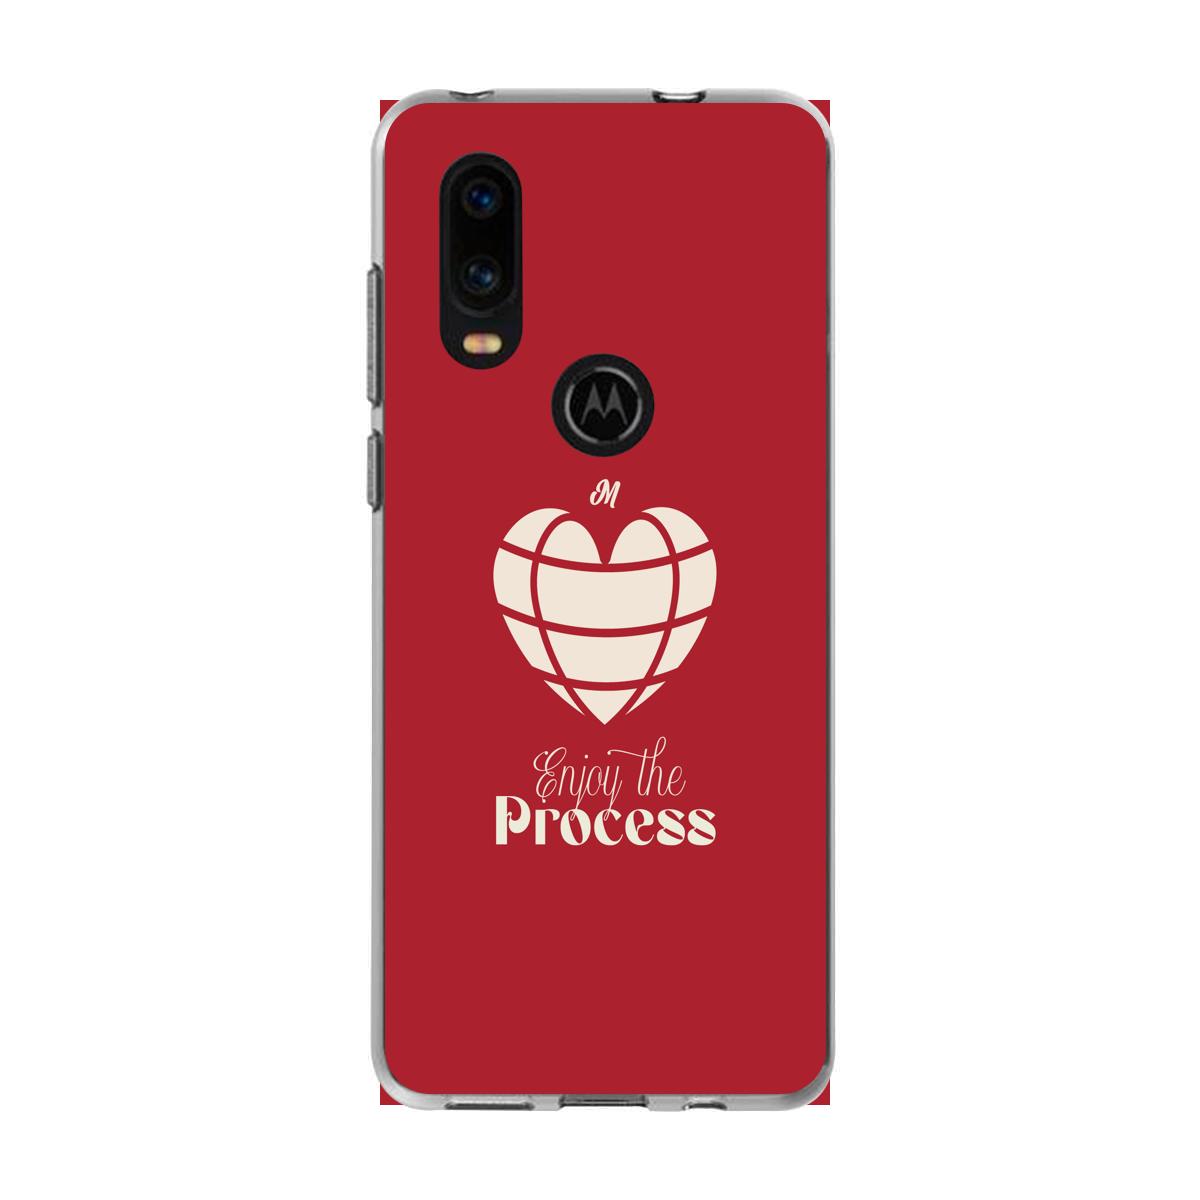 Cases para Motorola P40 ENJOY THE PROCESS - Mandala Cases